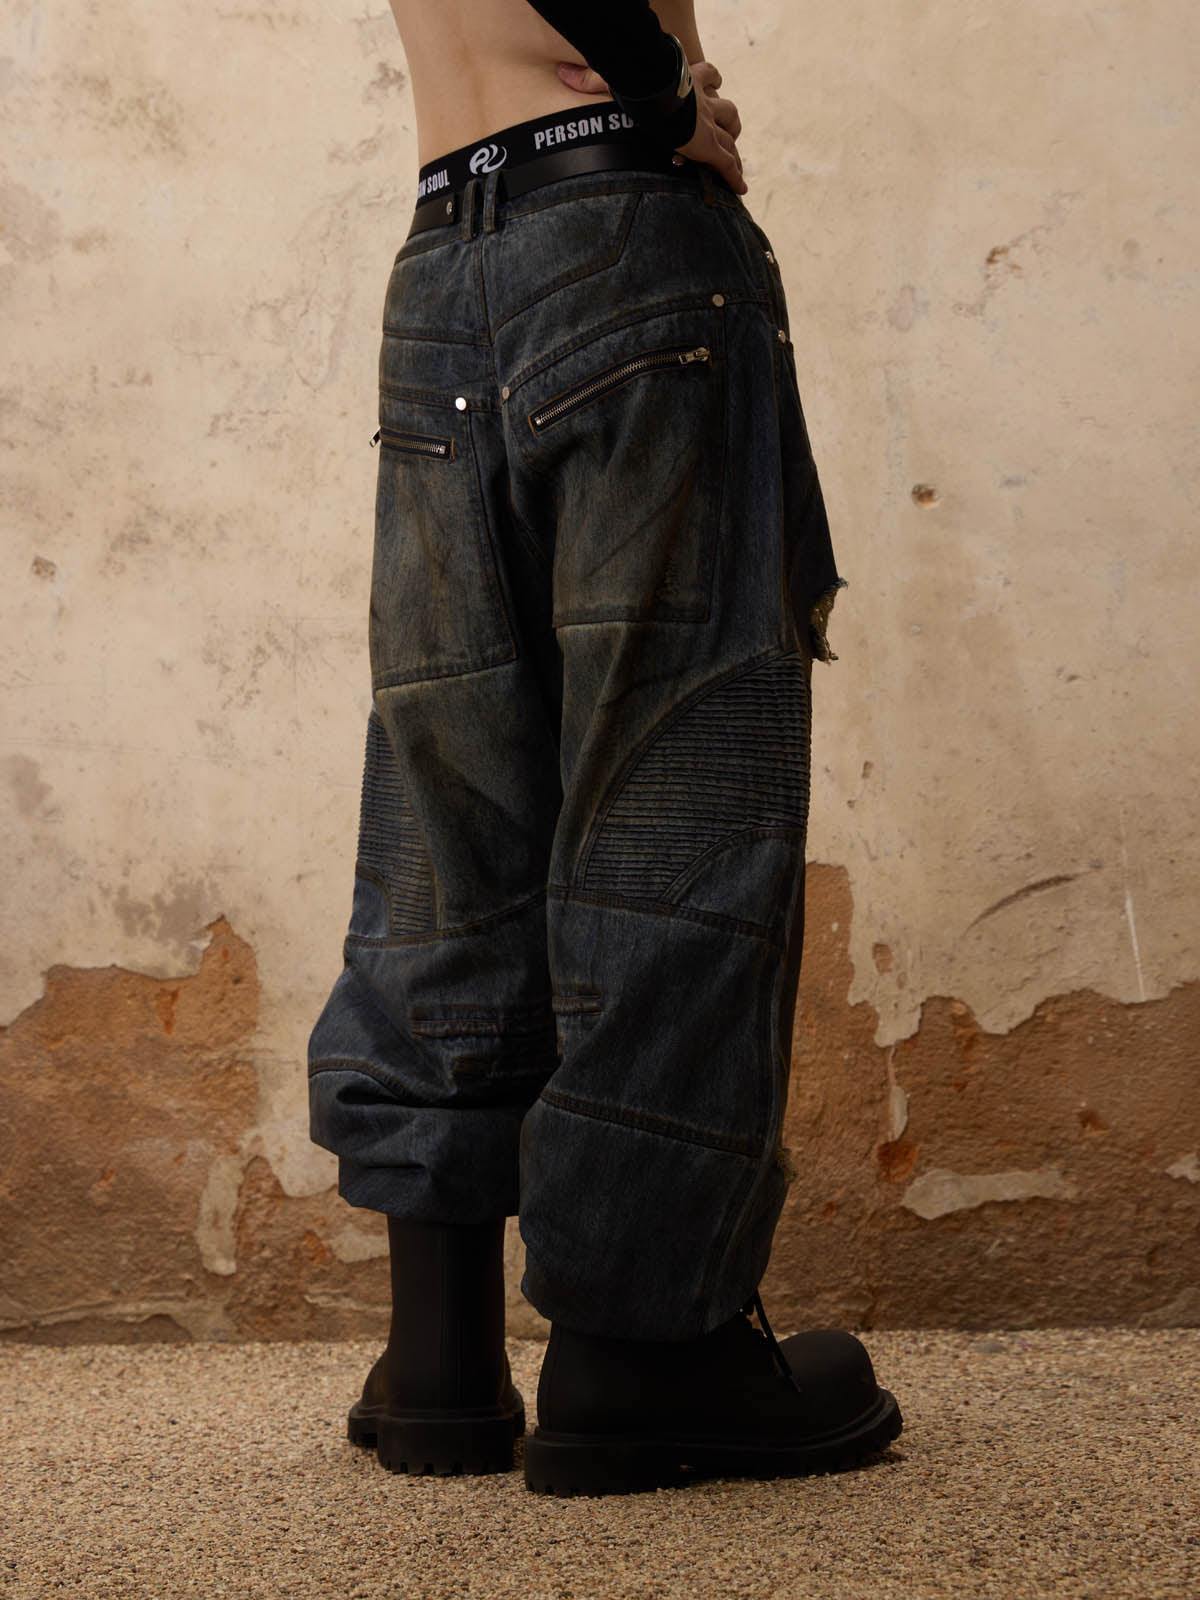 Personsoul Armor Dirty Denim Jeans